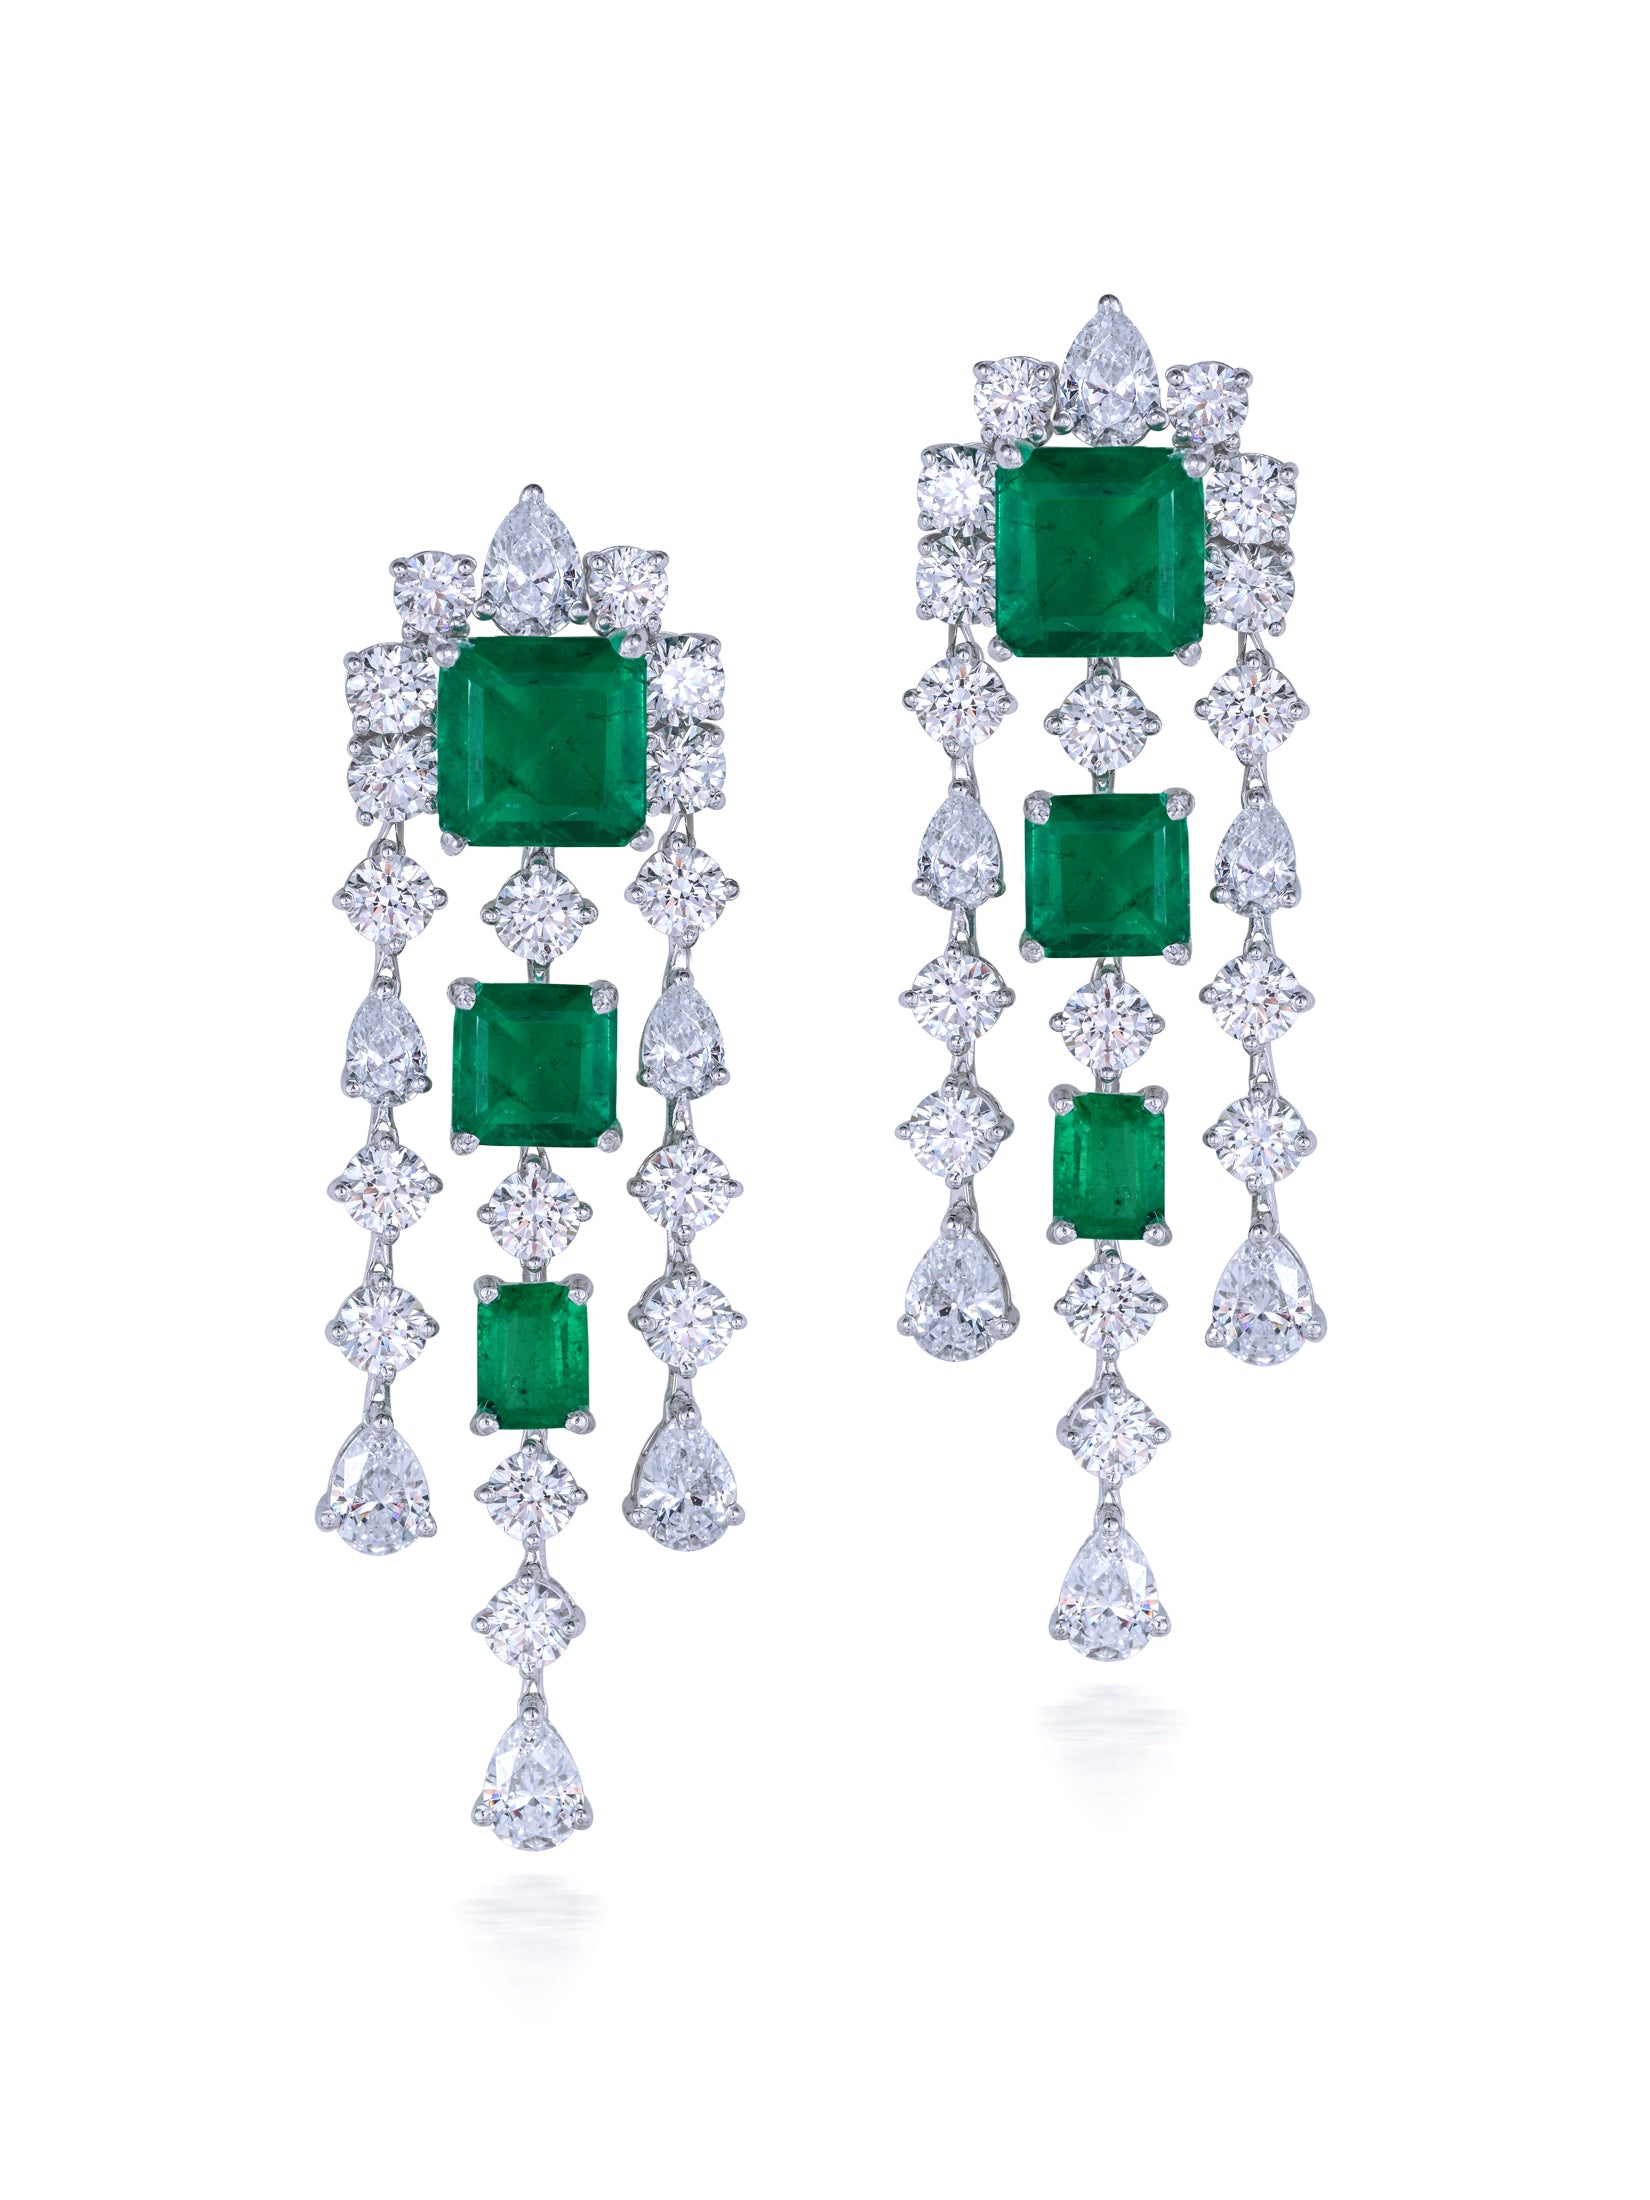 Green and White Danglers & Drops Earrings